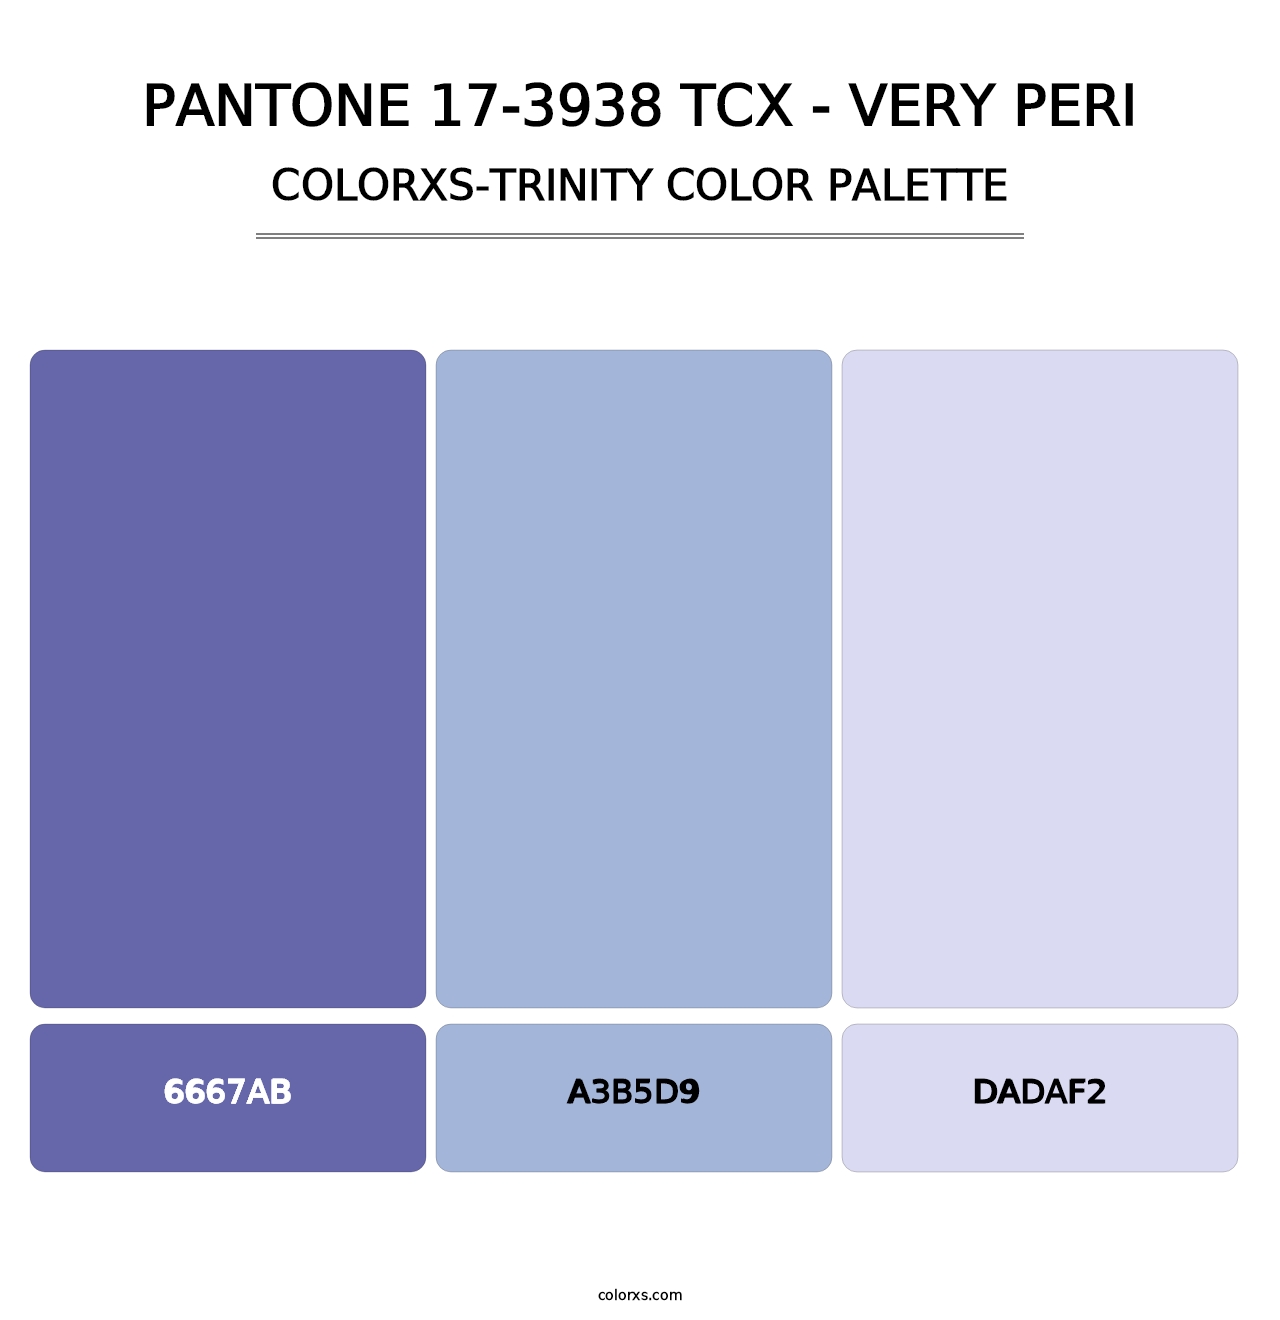 PANTONE 17-3938 TCX - Very Peri - Colorxs Trinity Palette